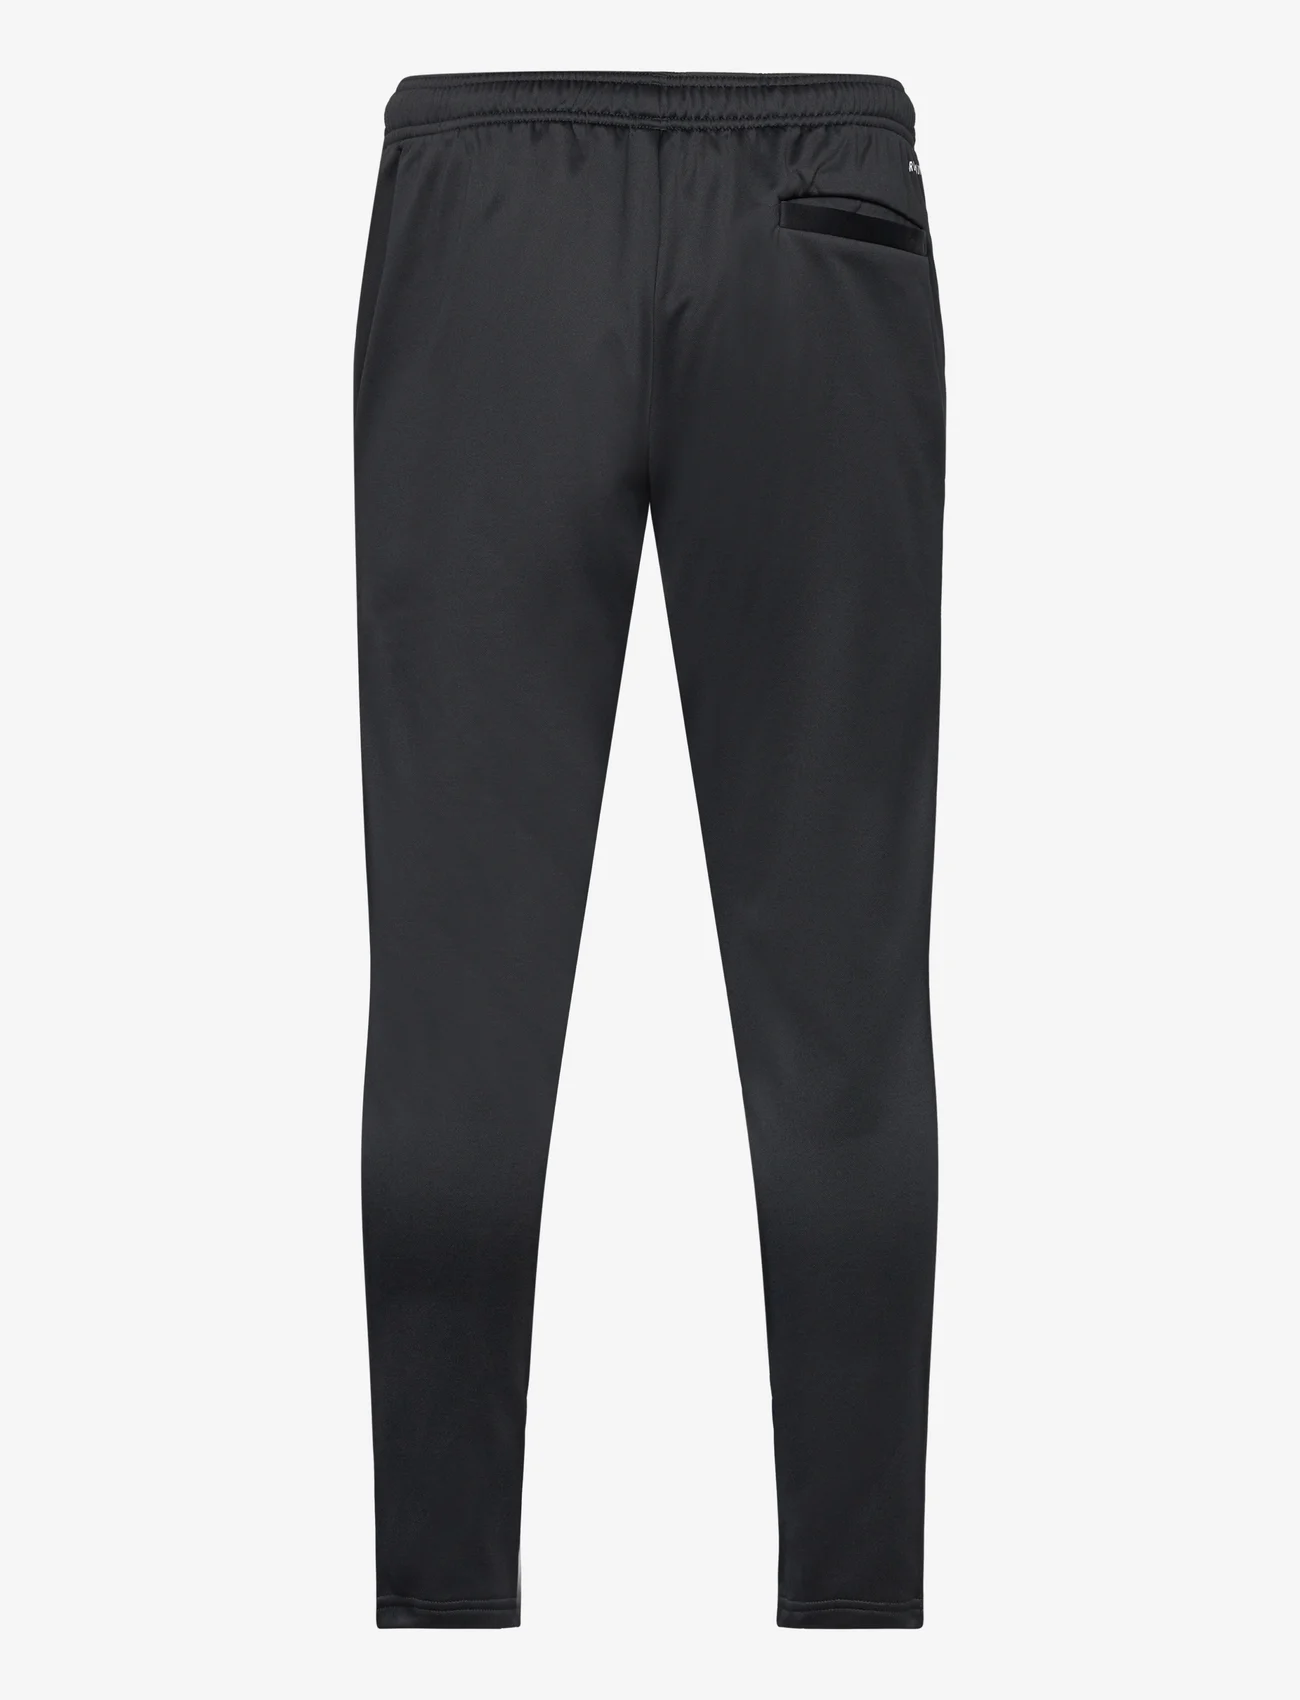 adidas Performance - M GG 3BAR PT - sports pants - black/white - 1